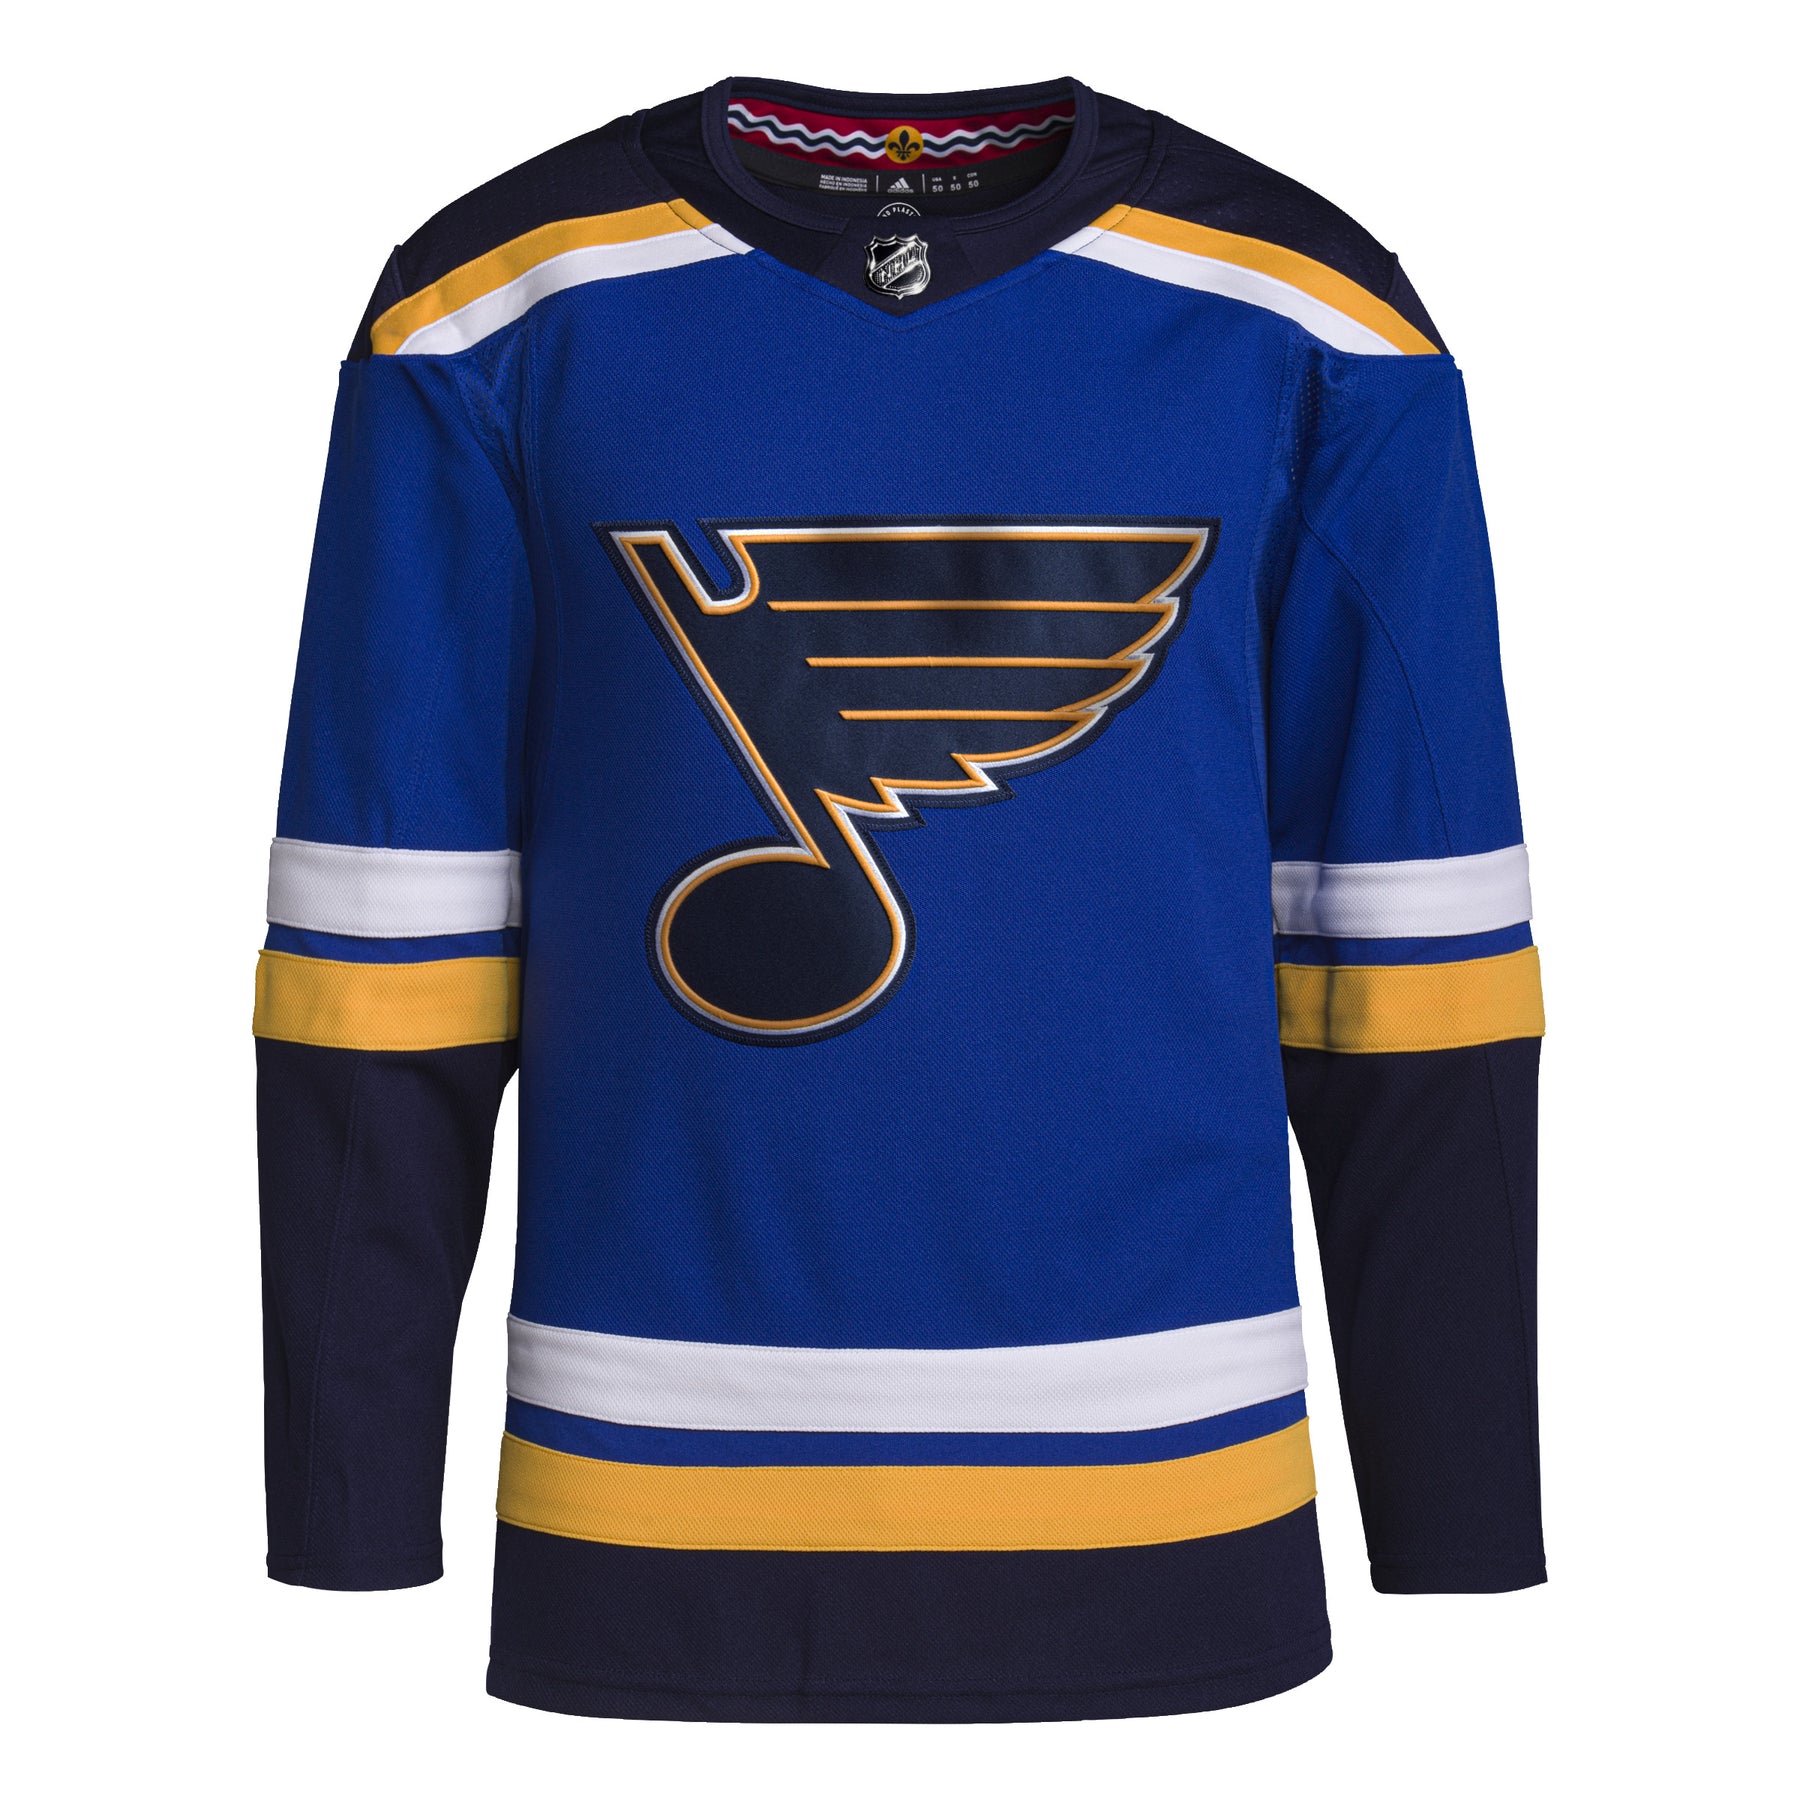 New St. Louis Blues Women's T- shirt NHL Ladies Hockey Shirt STL Blue Color